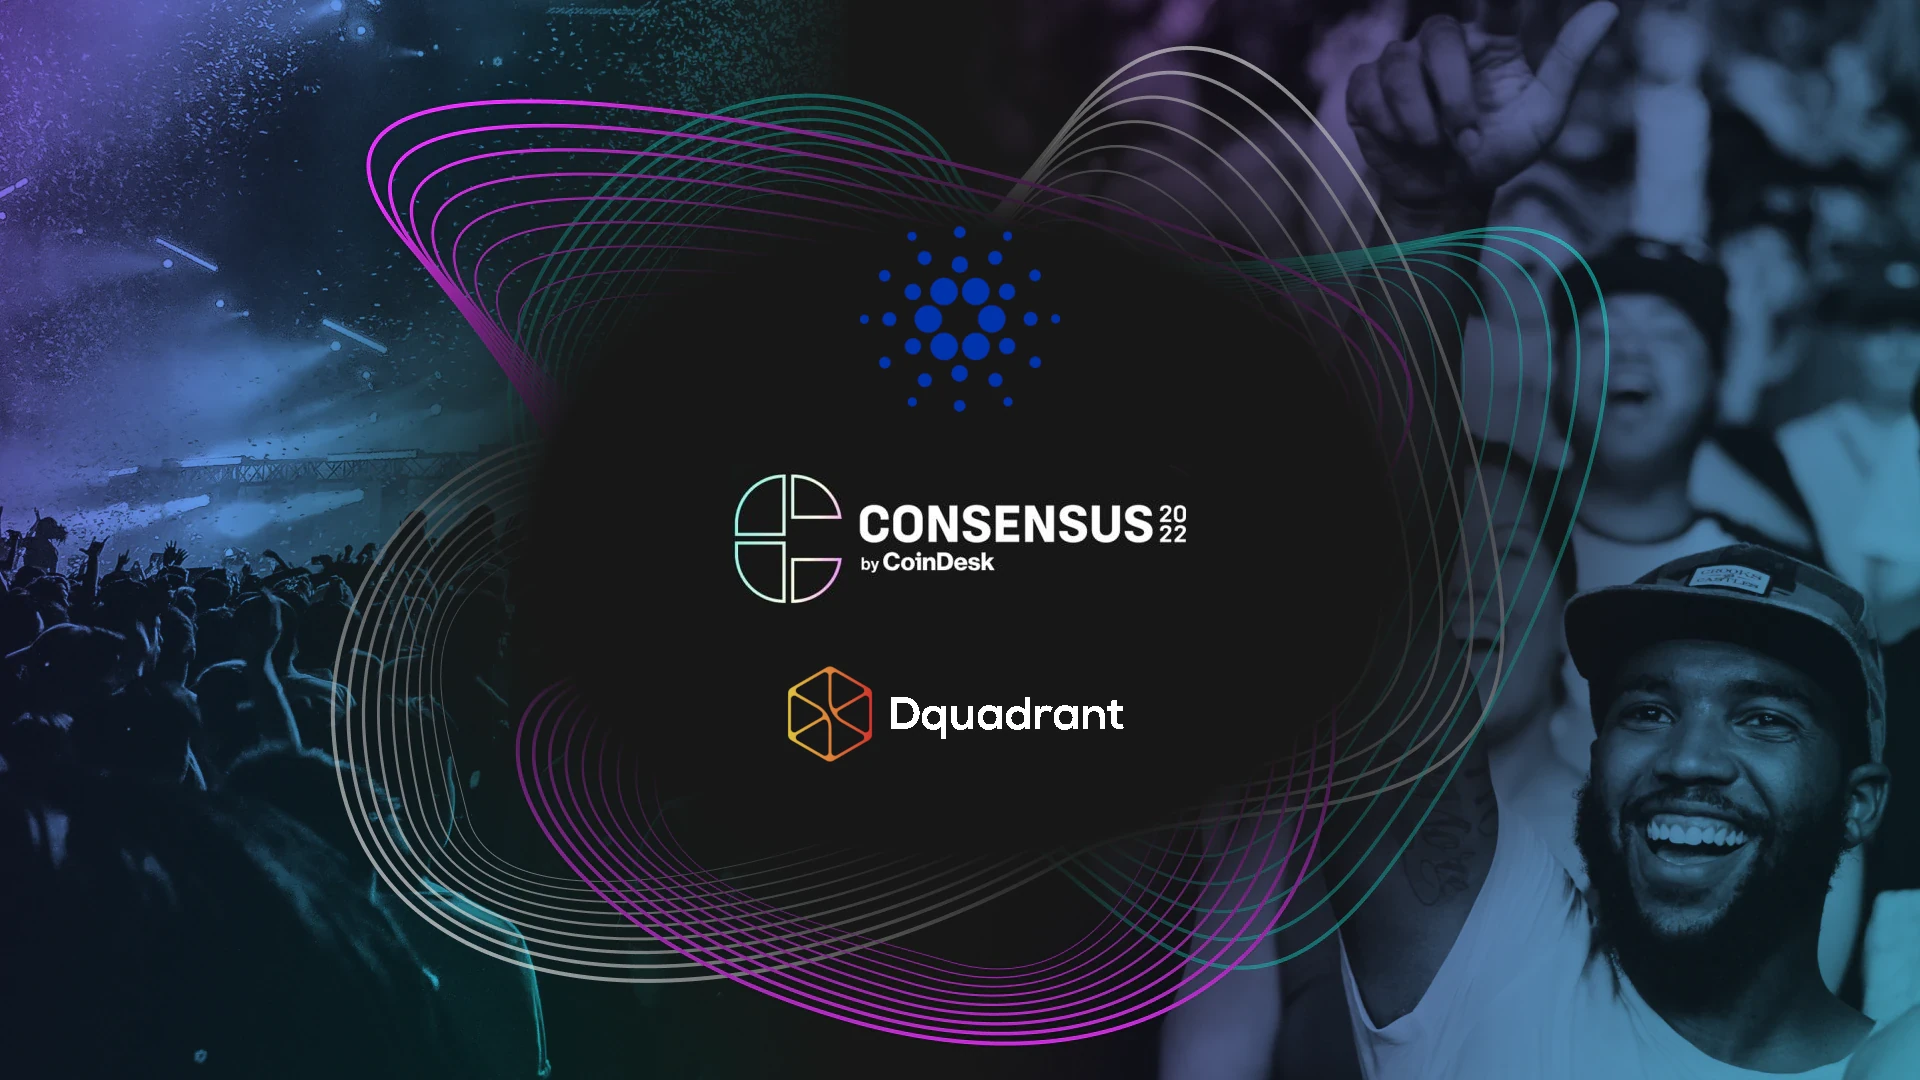 Dquadrant supports Cardano at Consensus 2022